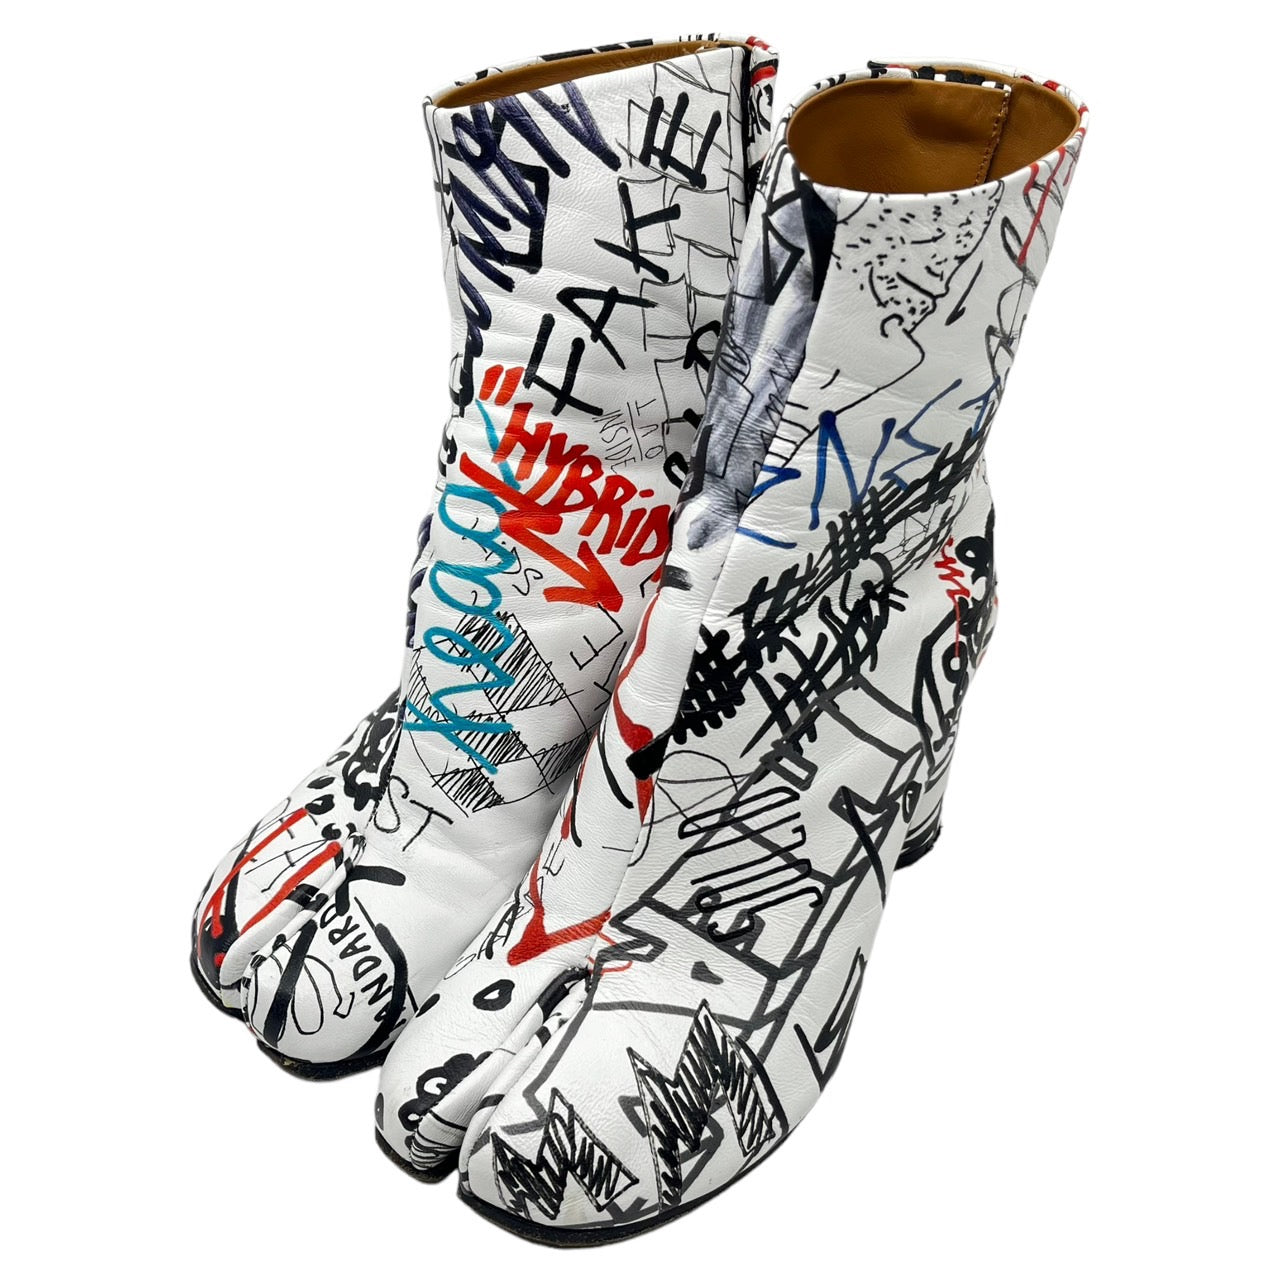 MAISON MARGIELA(メゾンマルジェラ) Graffiti Tabi boots/落書き足袋ブーツ/グラフィック S58WU0260  SIZE 36(23.0cm) ホワイト×マルチカラー